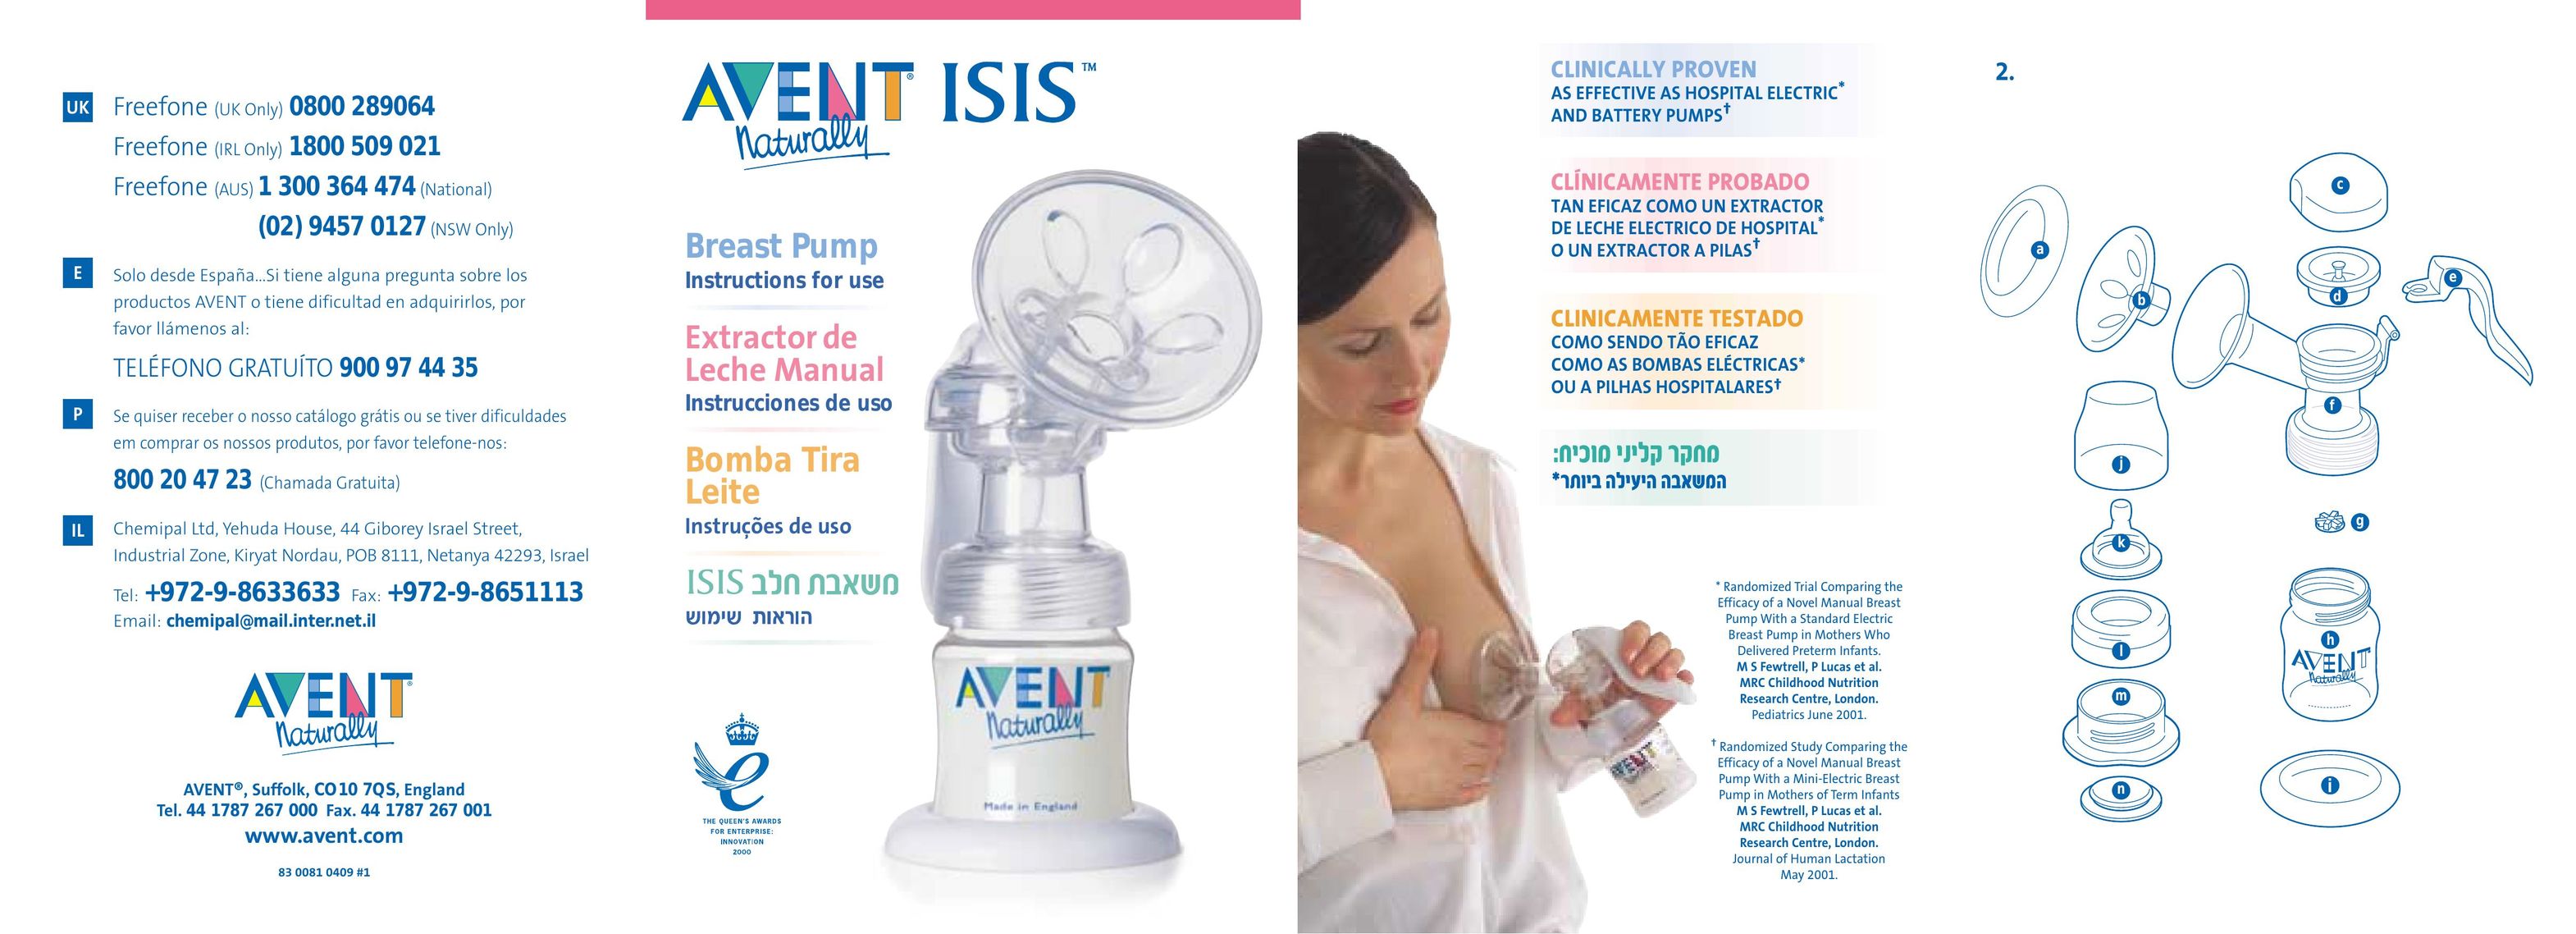 Avent Isis Breast Pump Breast Pump User Manual